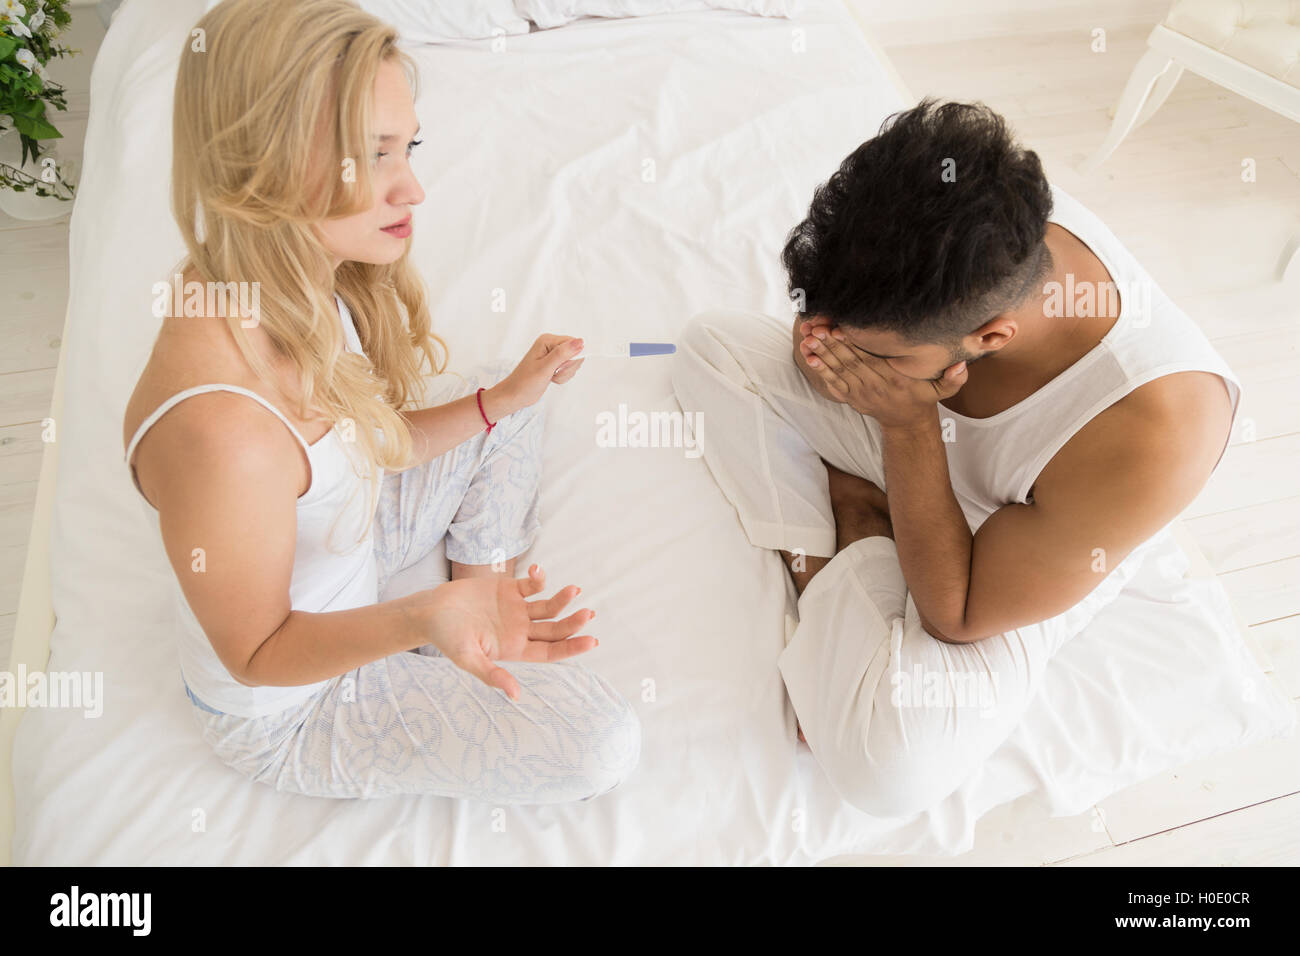 Couple Sitting Bed Argue, Having Conflict Relationships Problem, Sad Negative Emotions Stock Photo